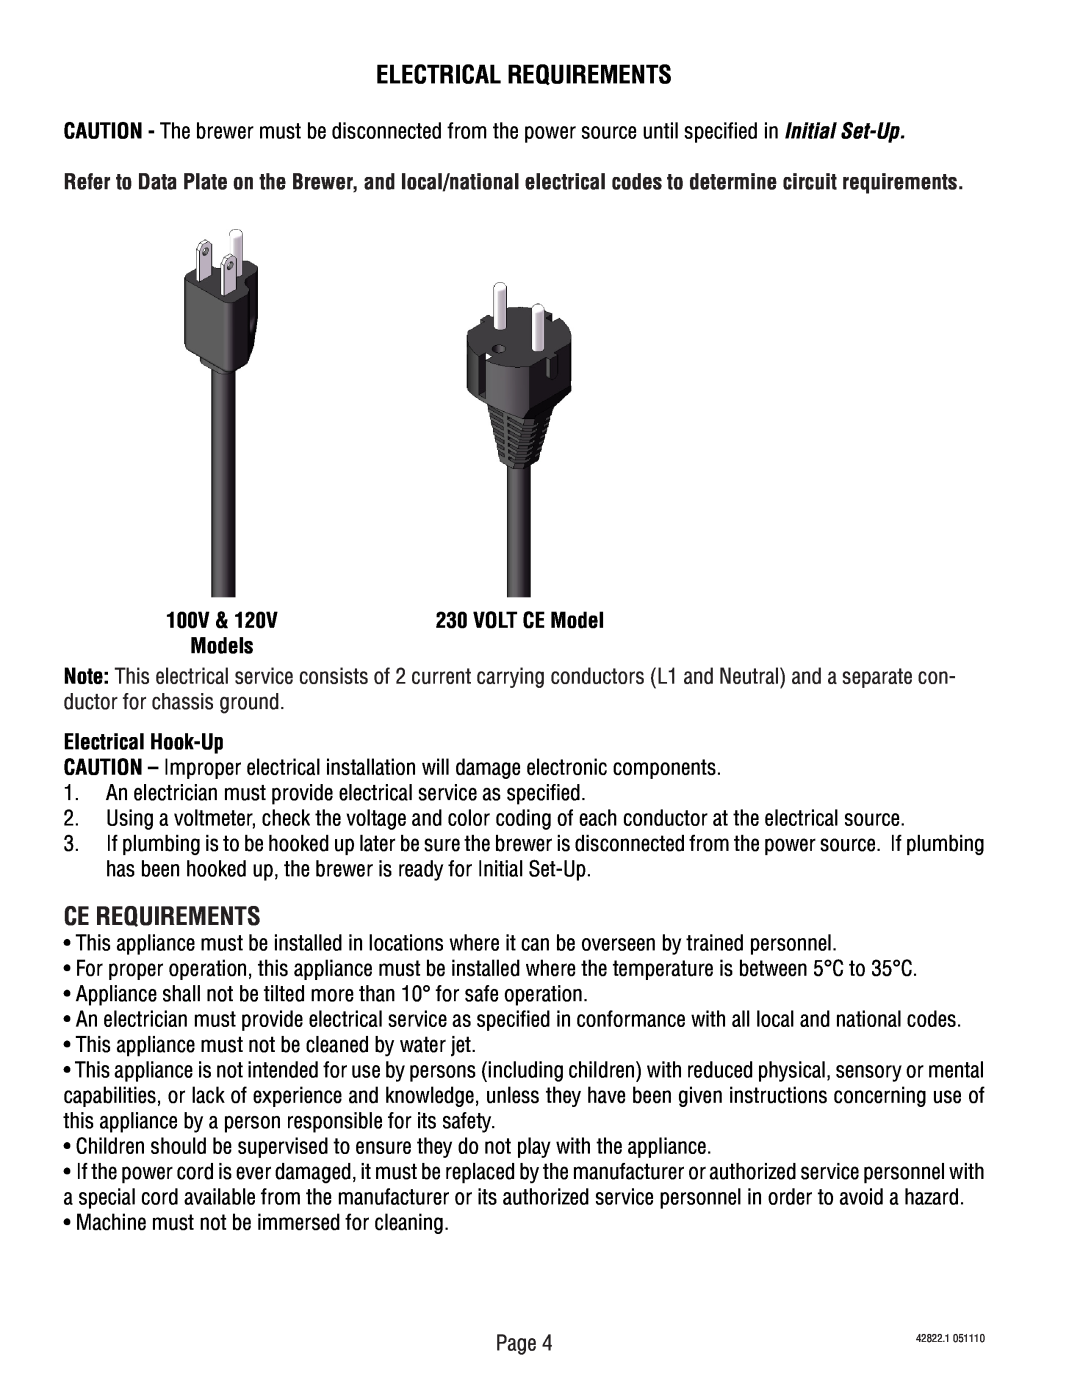 Bunn 428220001E Electrical Requirements, Ce Requirements, 100V, VOLT CE Model, VOLT UK Model, Electrical Hook-Up 